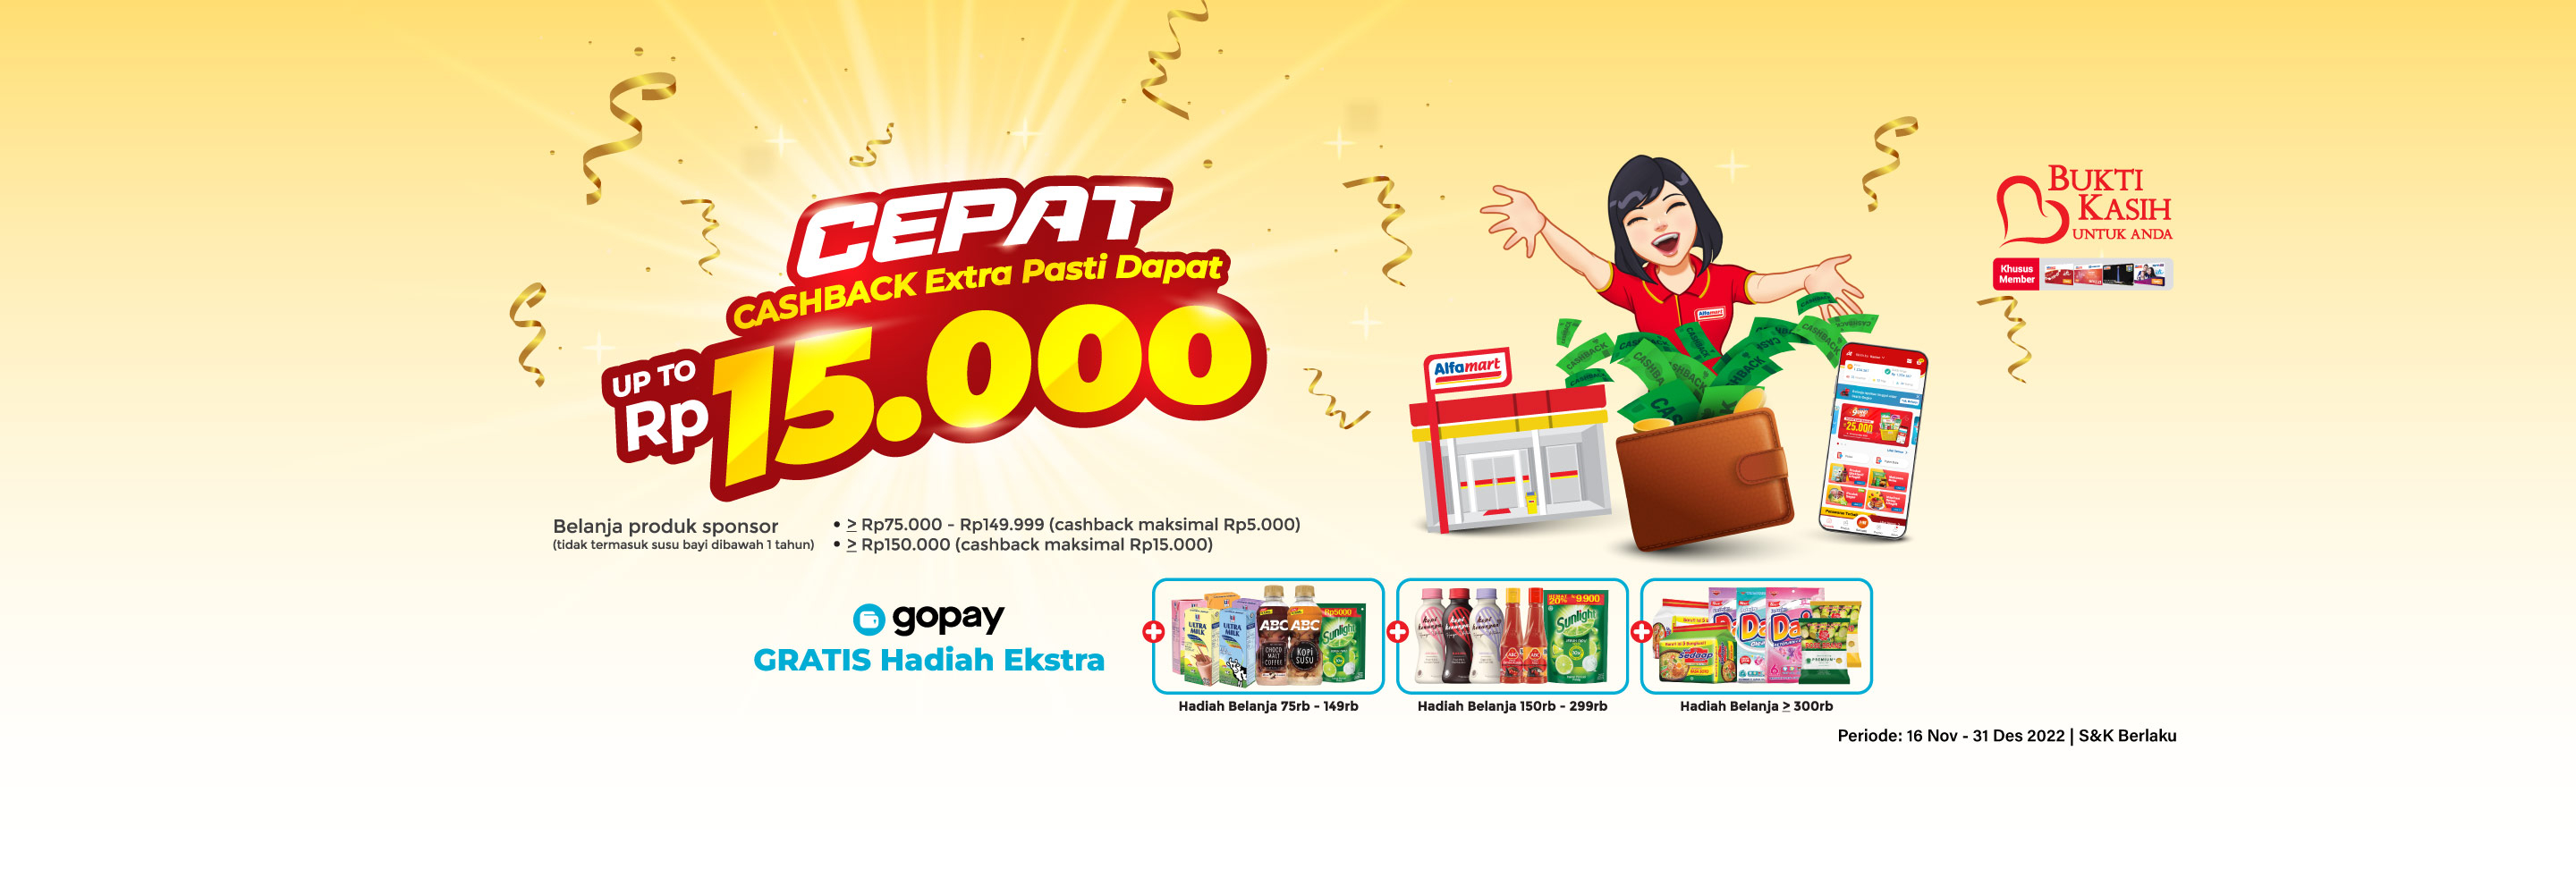 Banner CEPAT - Cashback Extra Pasti Dapat Alfamart